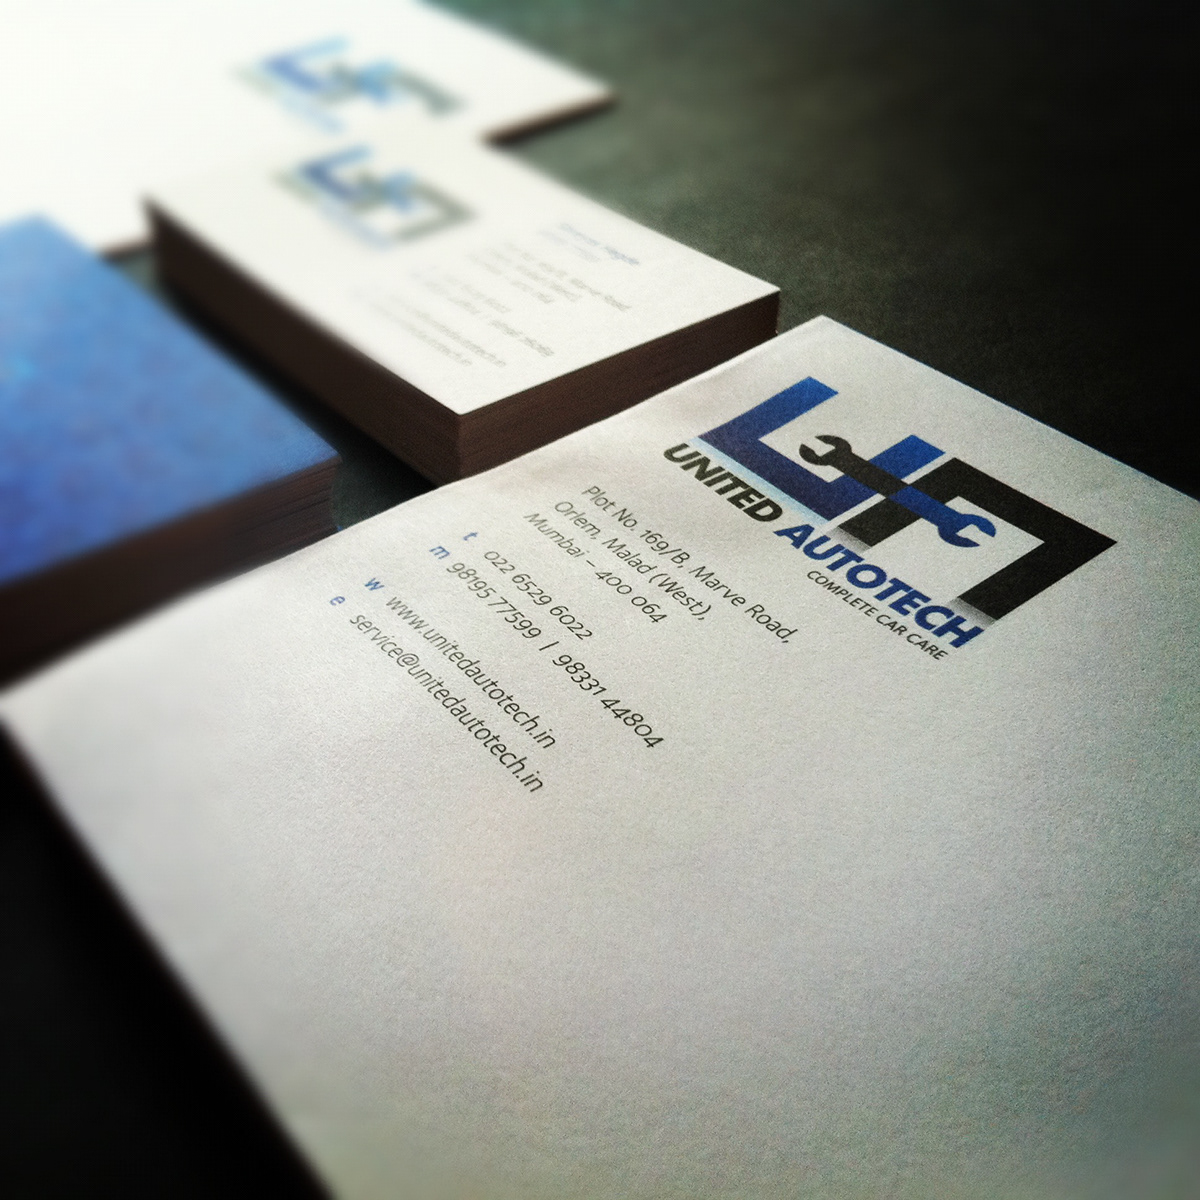 White  blue  Car  workshop  Visiting card  business  logo design  logos  envelope  design  print  letterhead design letterhead  Photography  brand identity  branding automobile